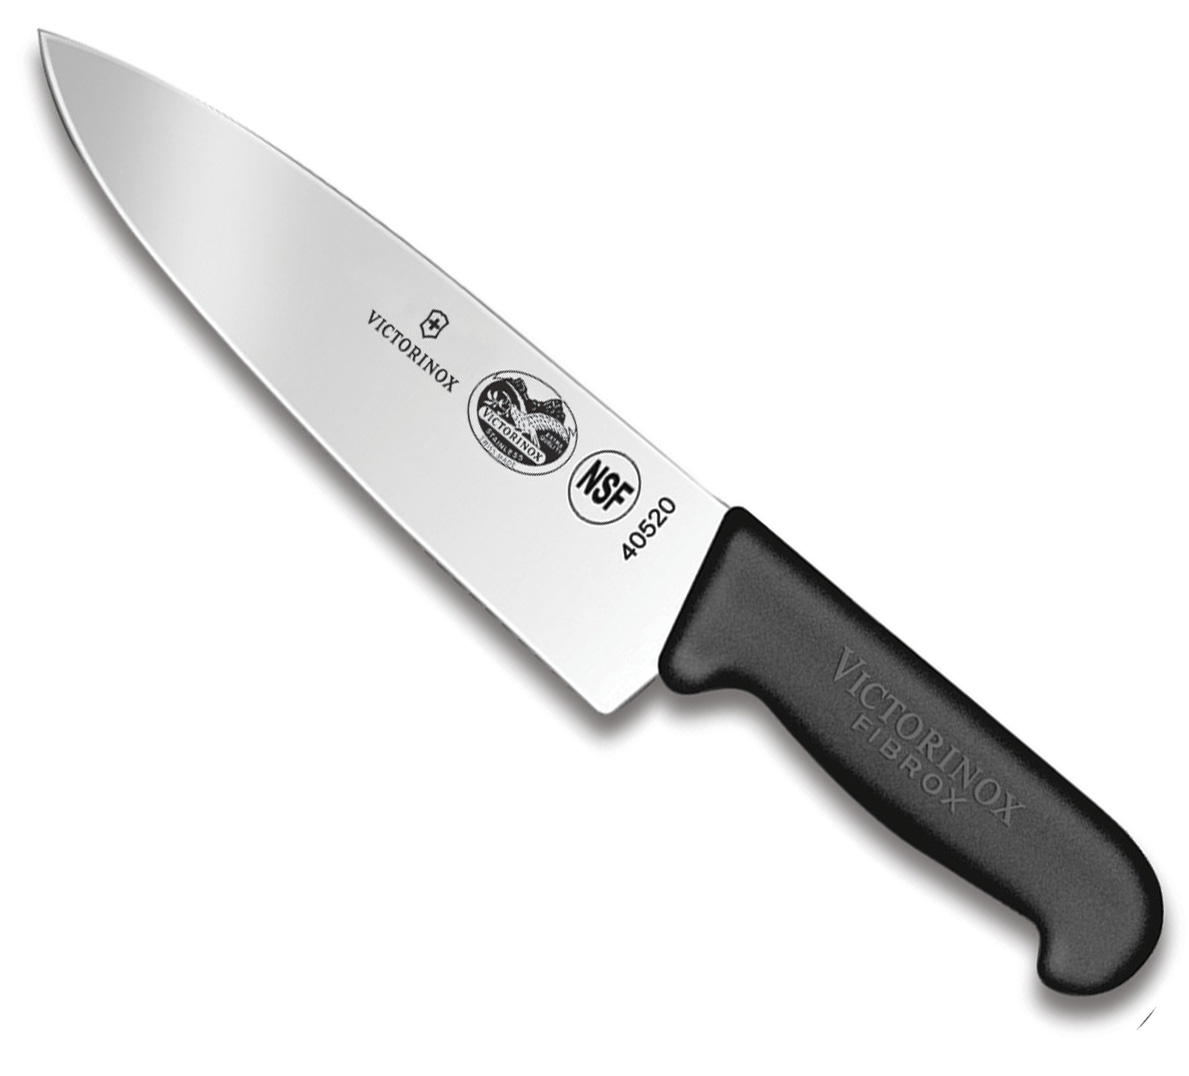 8 inch chef knife